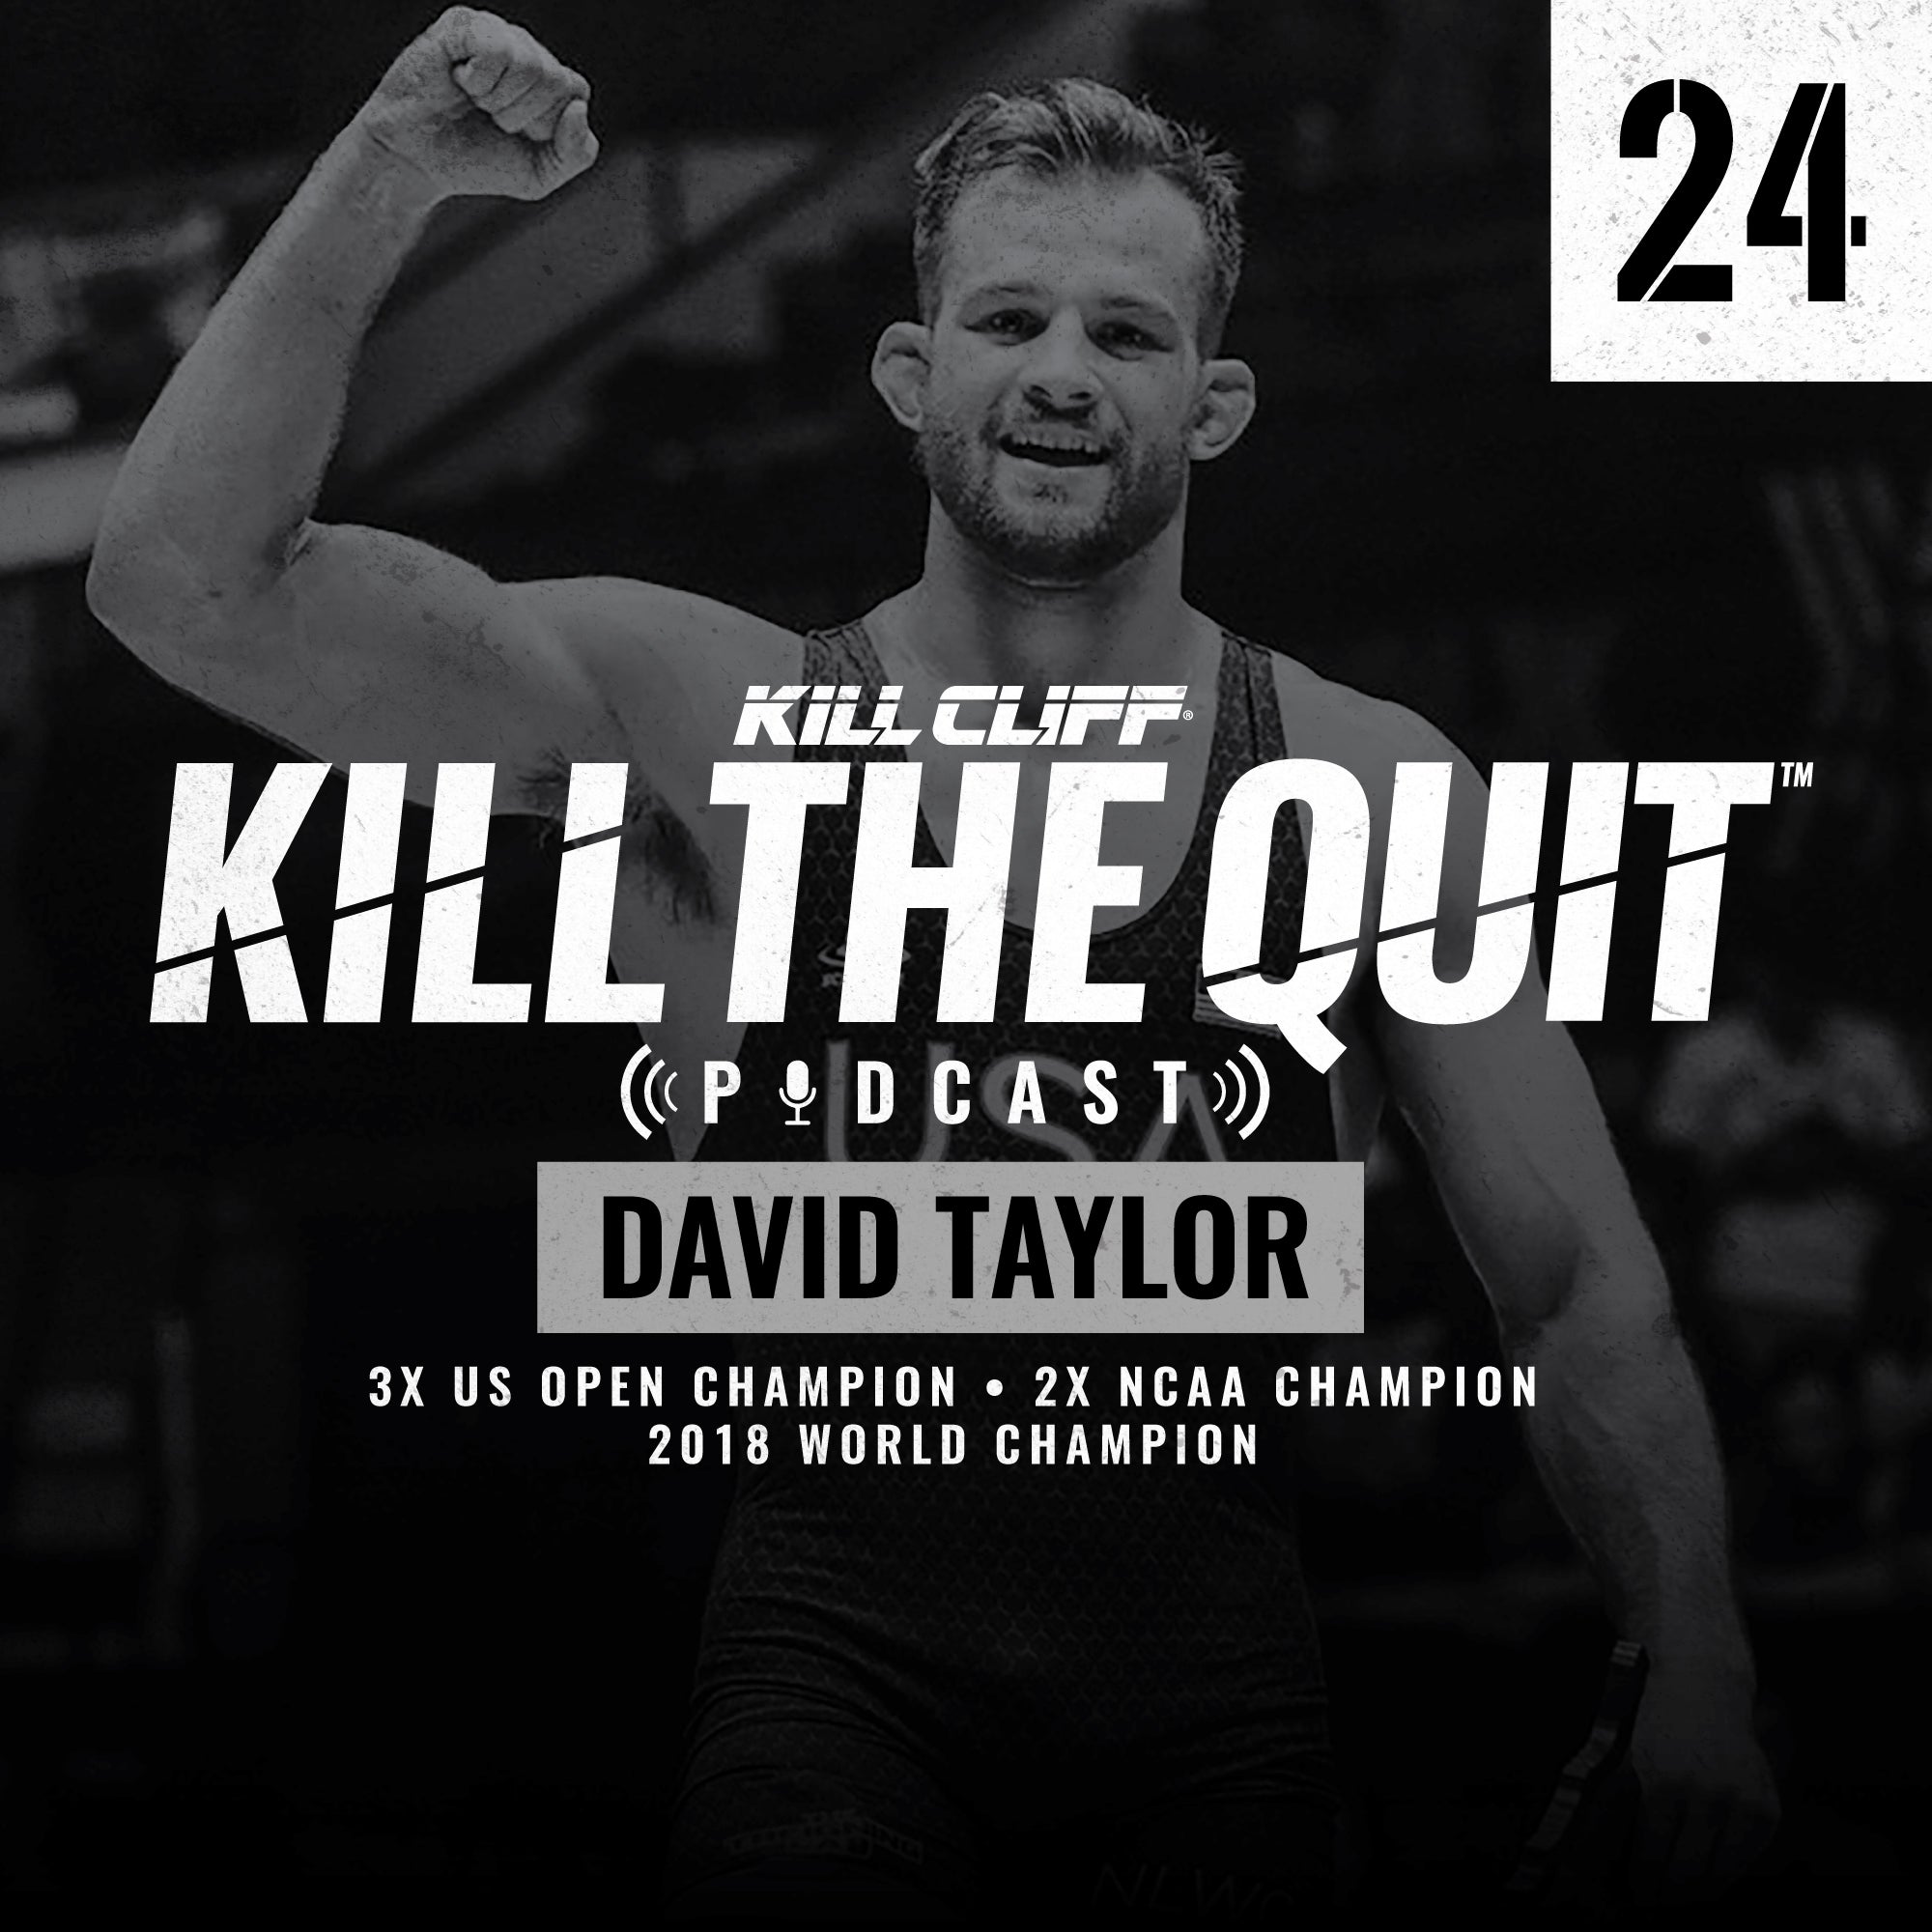 PODCAST Ep. 024 - David Taylor - Kill Cliff